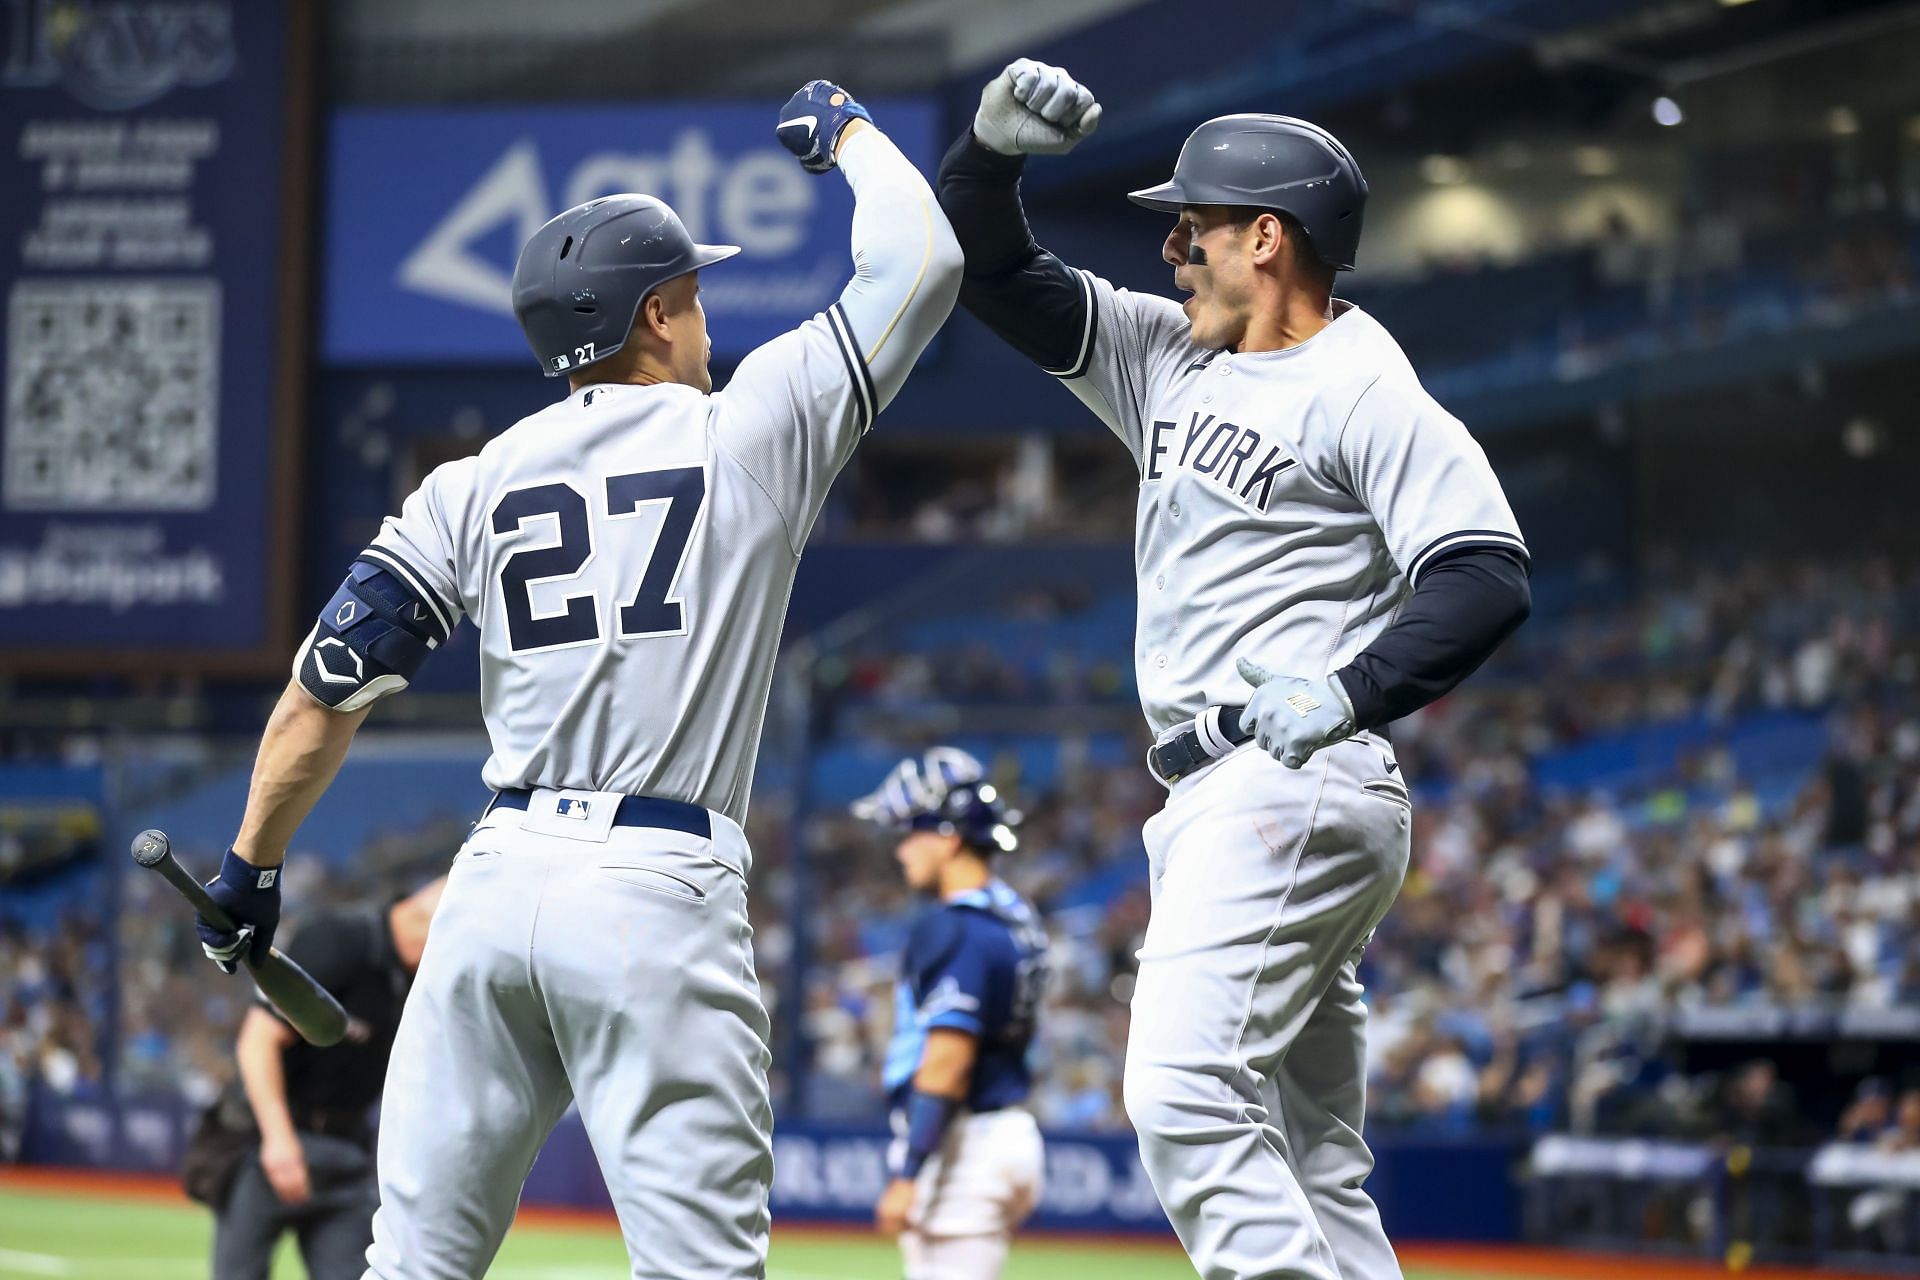 New York Yankees first baseman Anthony Rizzo hit his 19th home run of the season tonight.